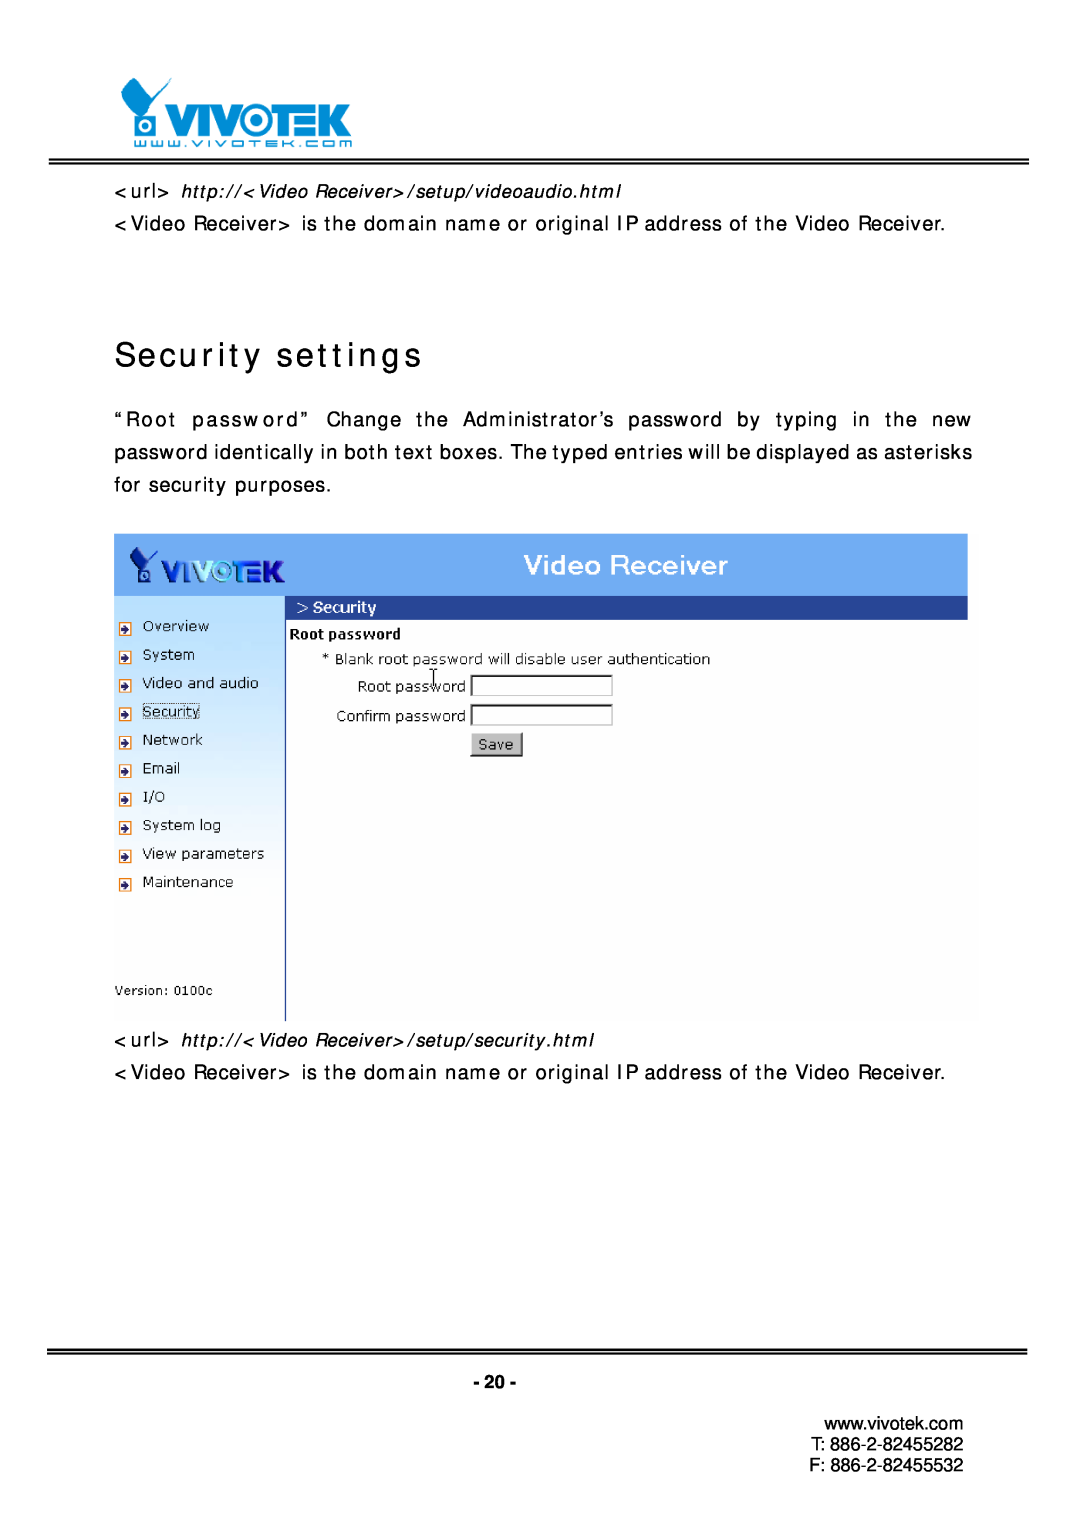 Vivotek RX7101 manual Security settings 